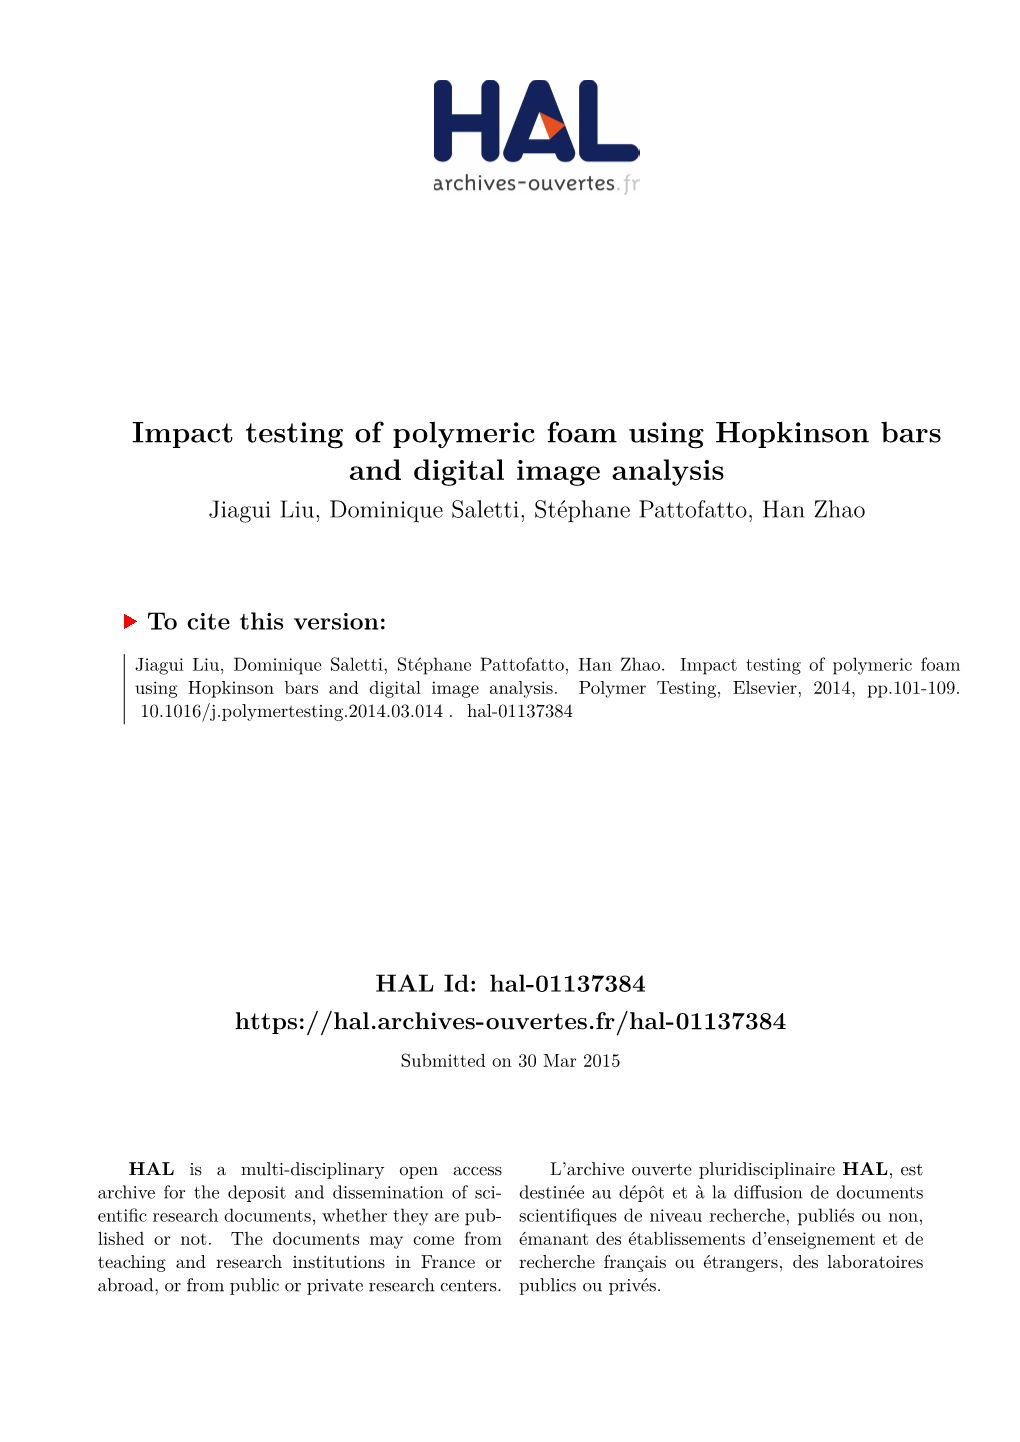 Impact Testing of Polymeric Foam Using Hopkinson Bars and Digital Image Analysis Jiagui Liu, Dominique Saletti, Stéphane Pattofatto, Han Zhao